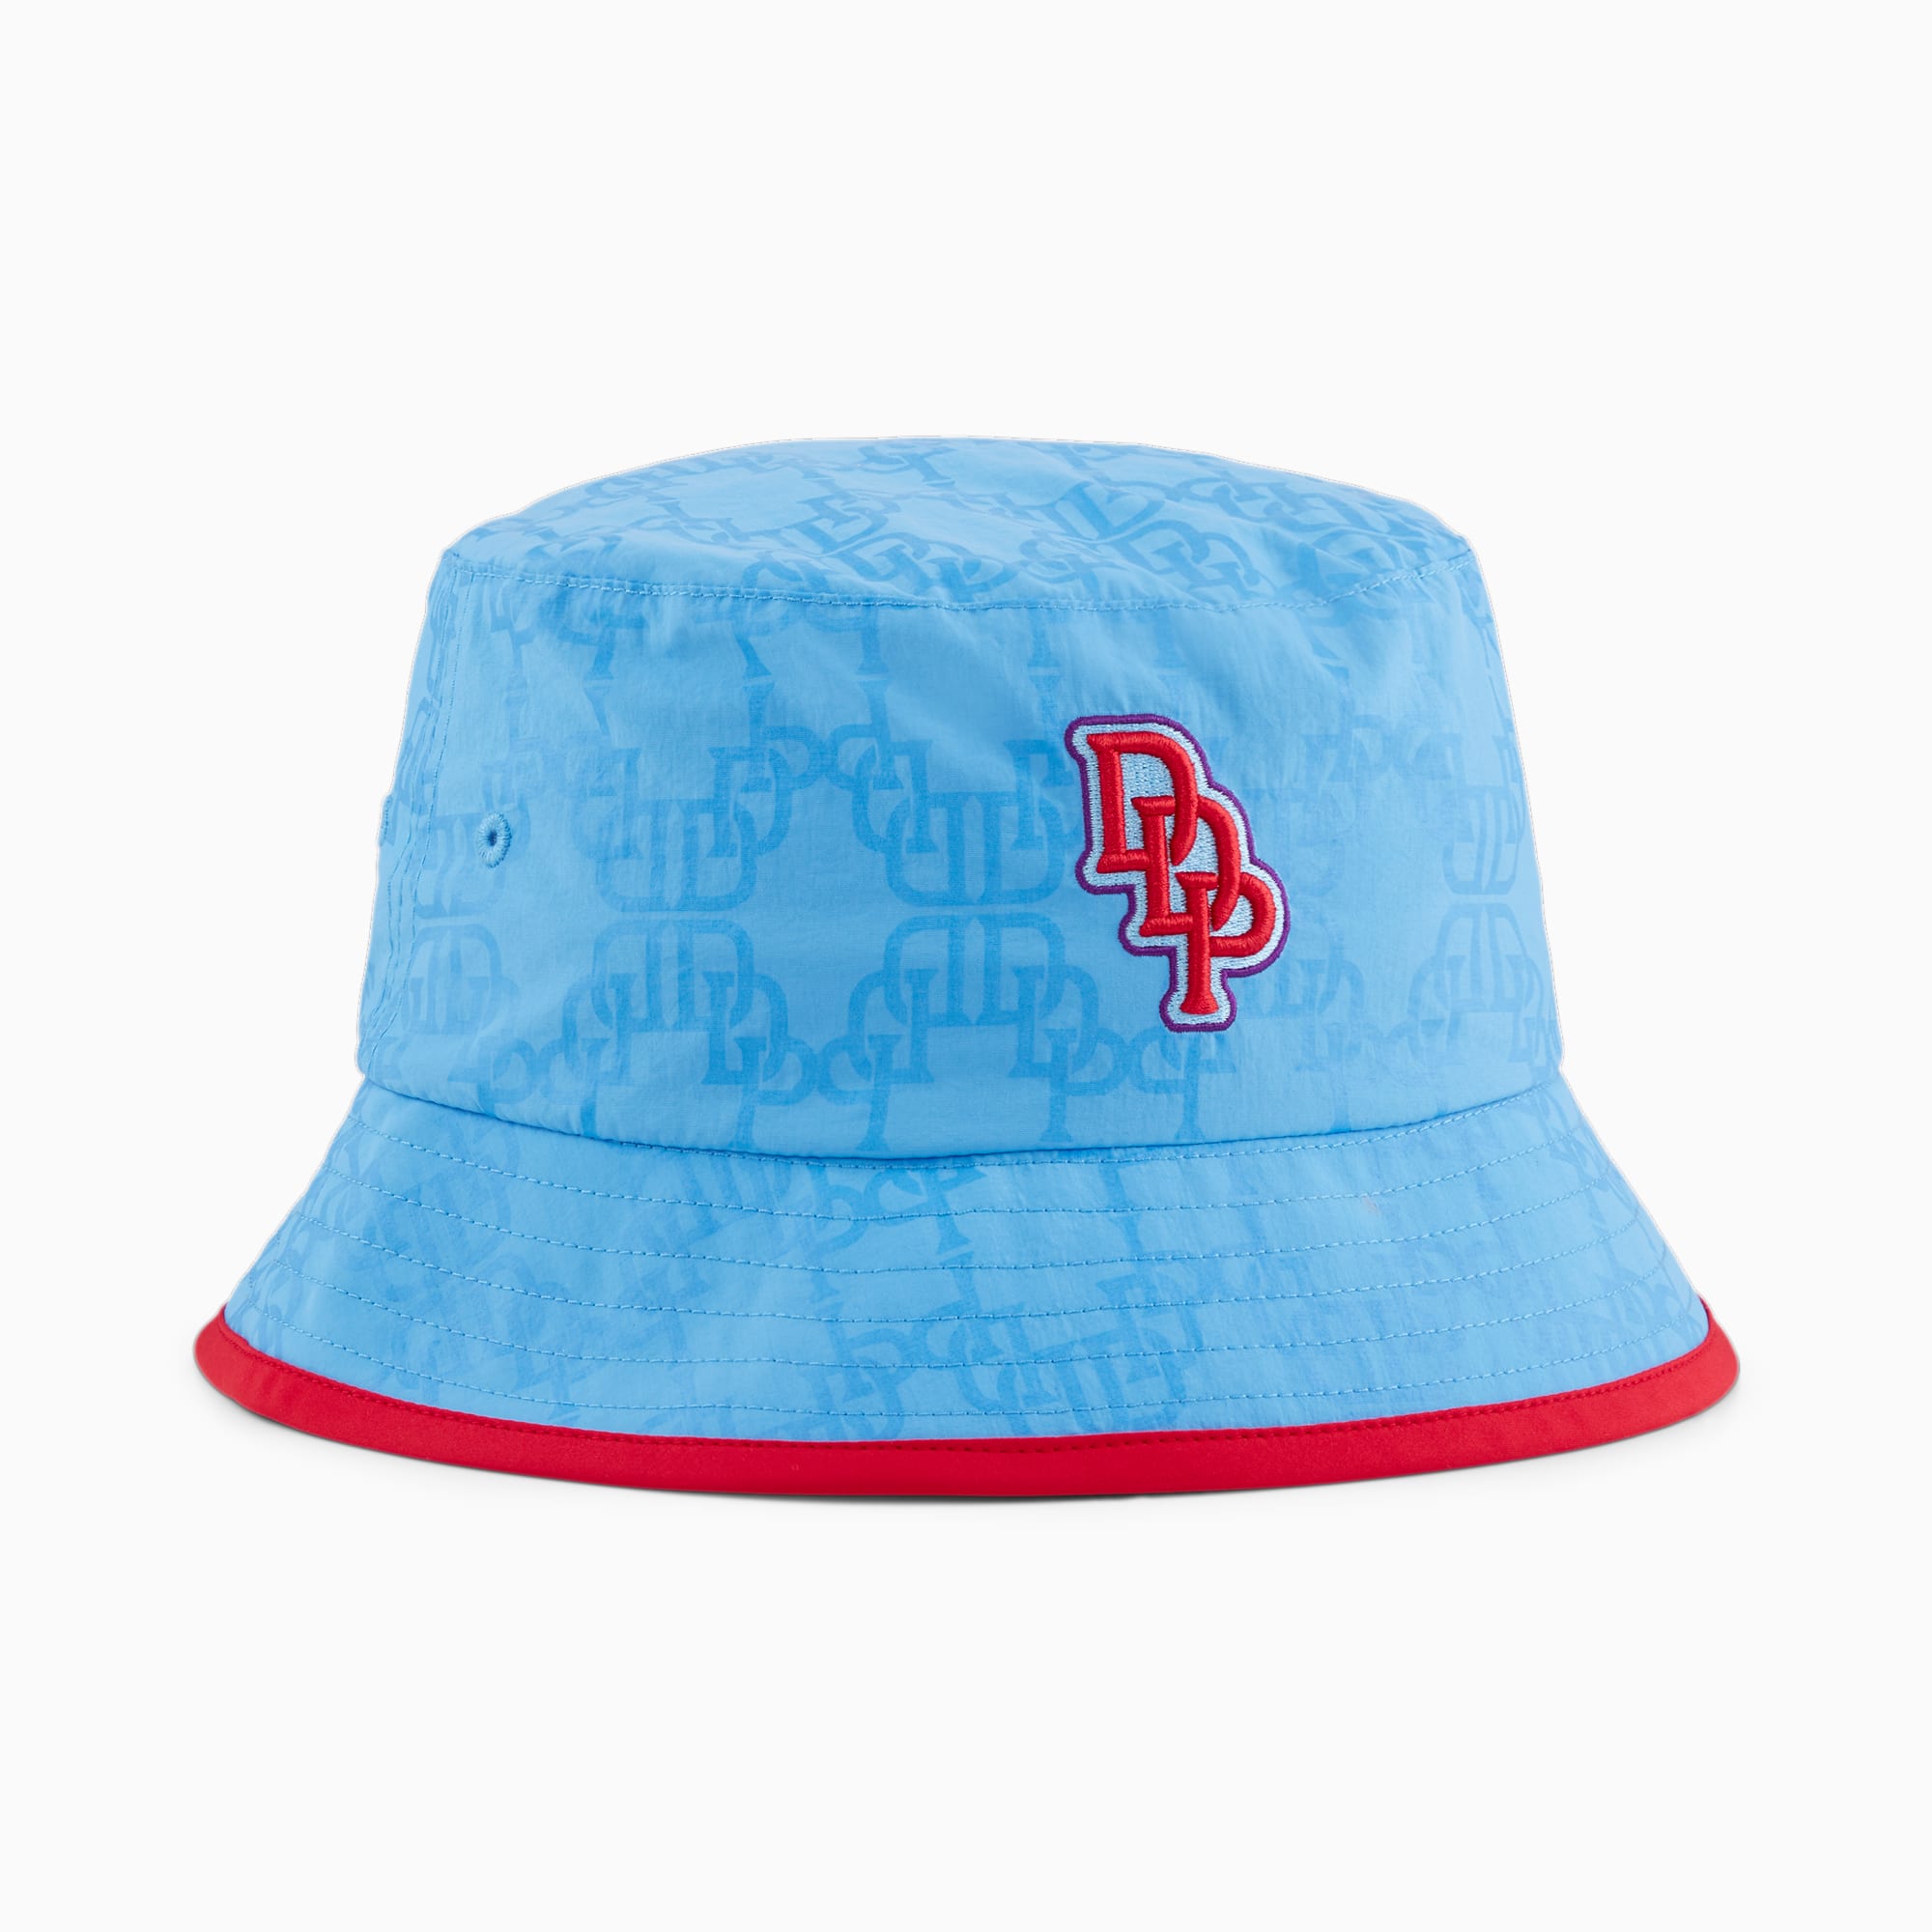 PUMA X DAPPER DAN Bucket Hat, Blau, Größe: L/XL, Accessoires